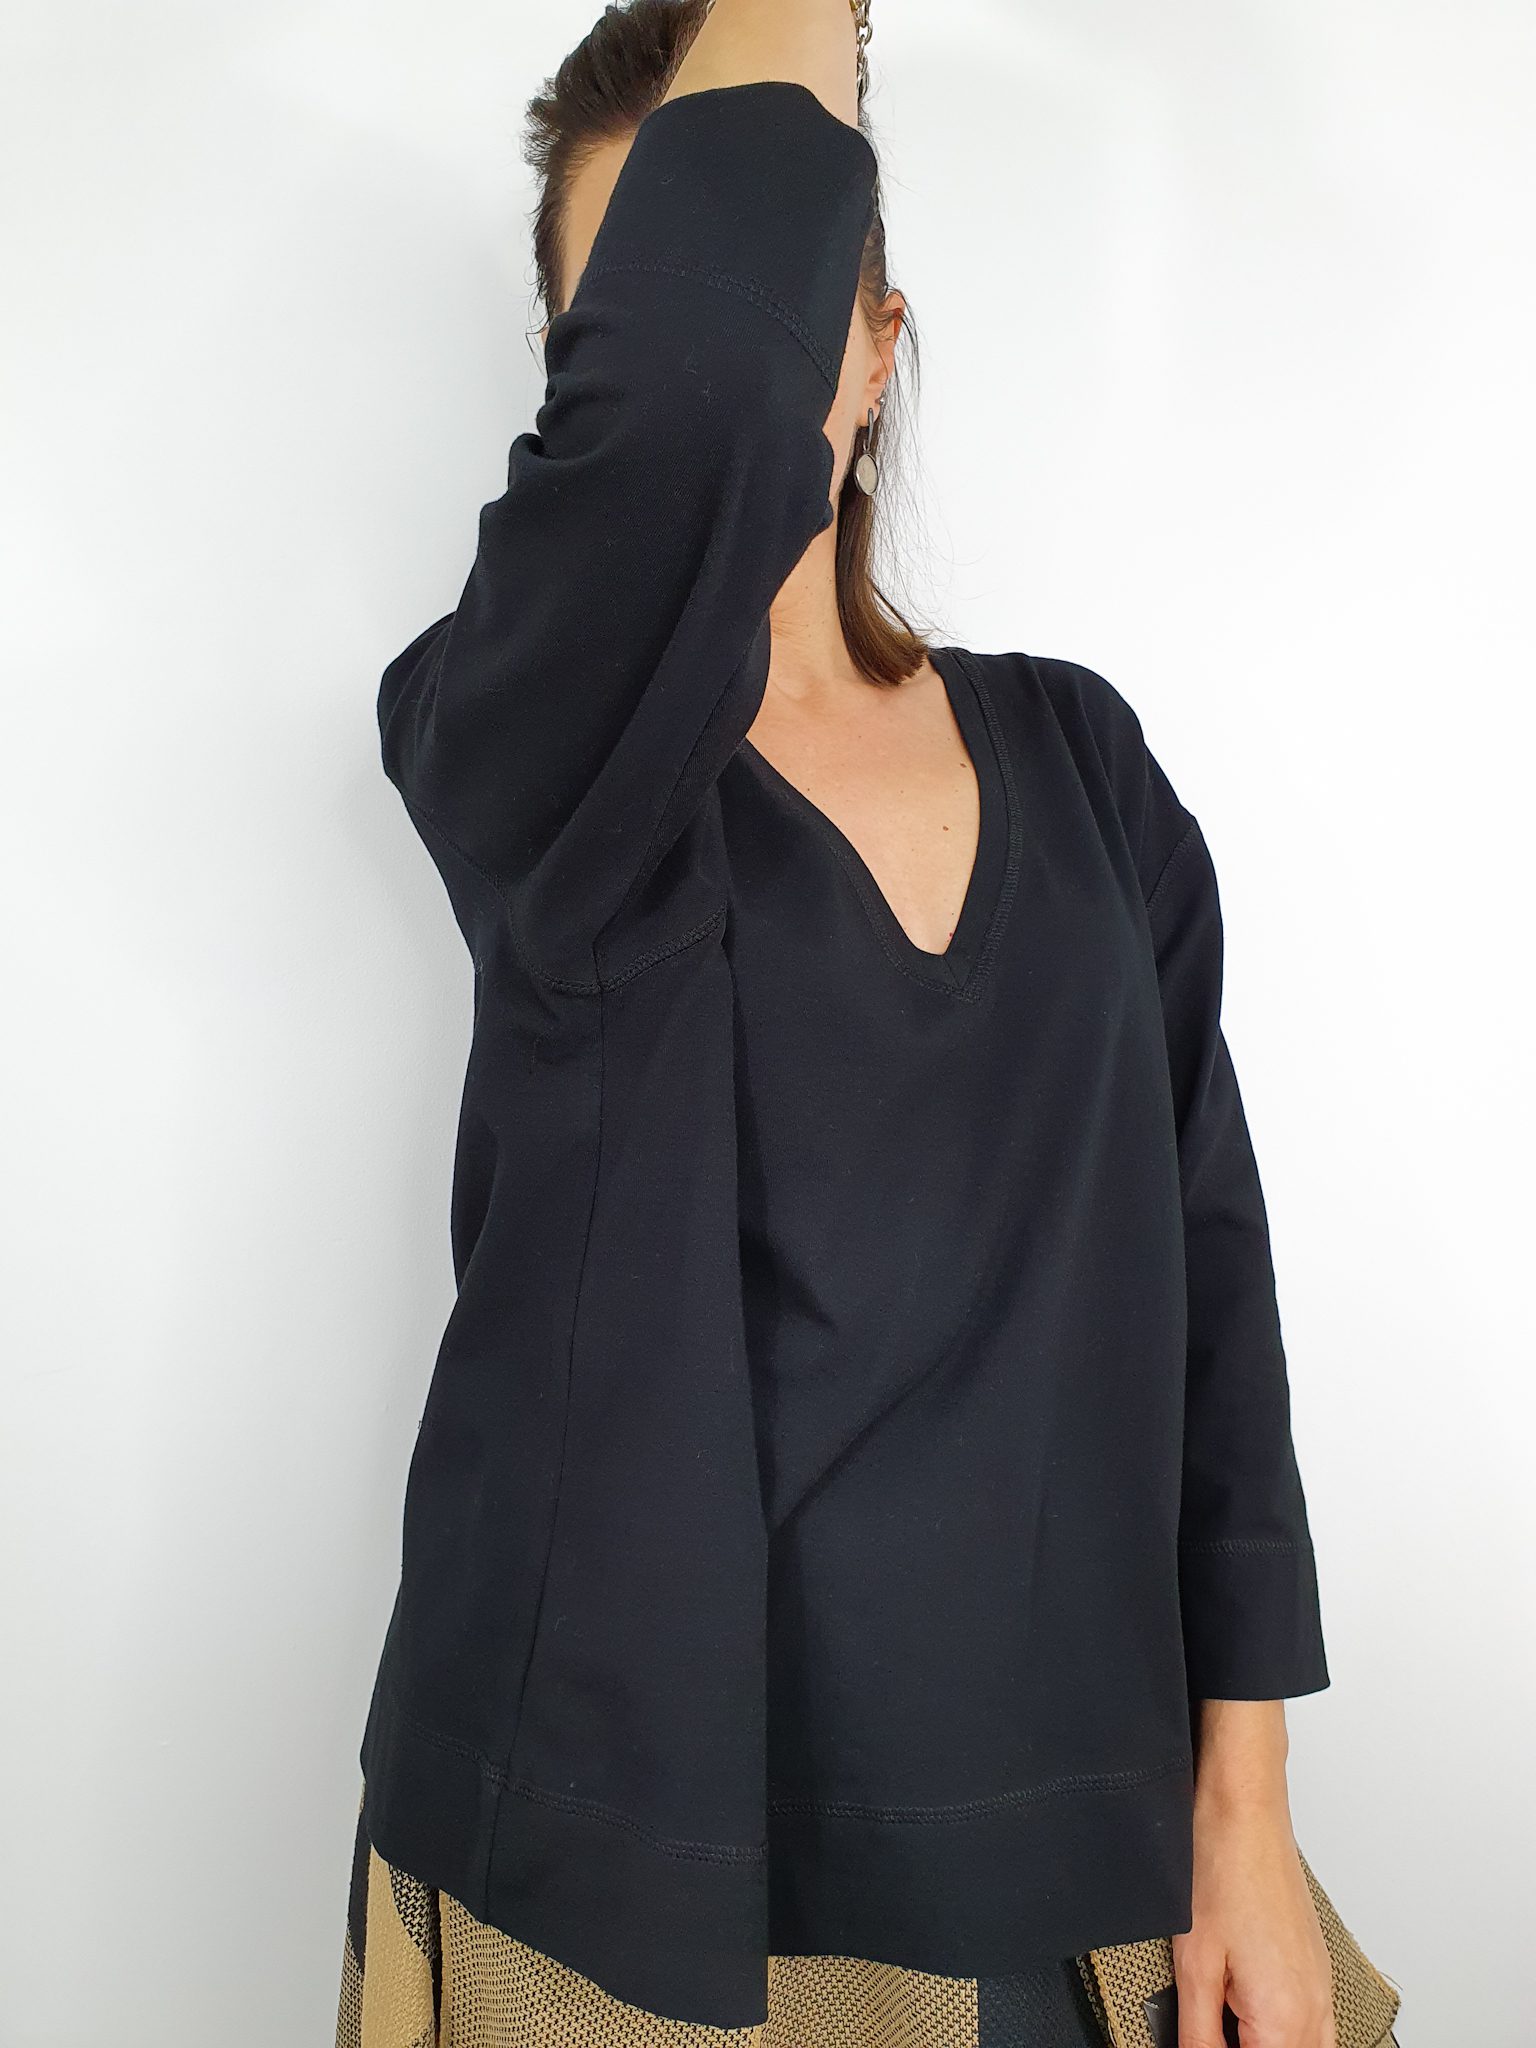 Moda Autorska Slow Fashion BezAle - bezale bluzka niezbednik V 2